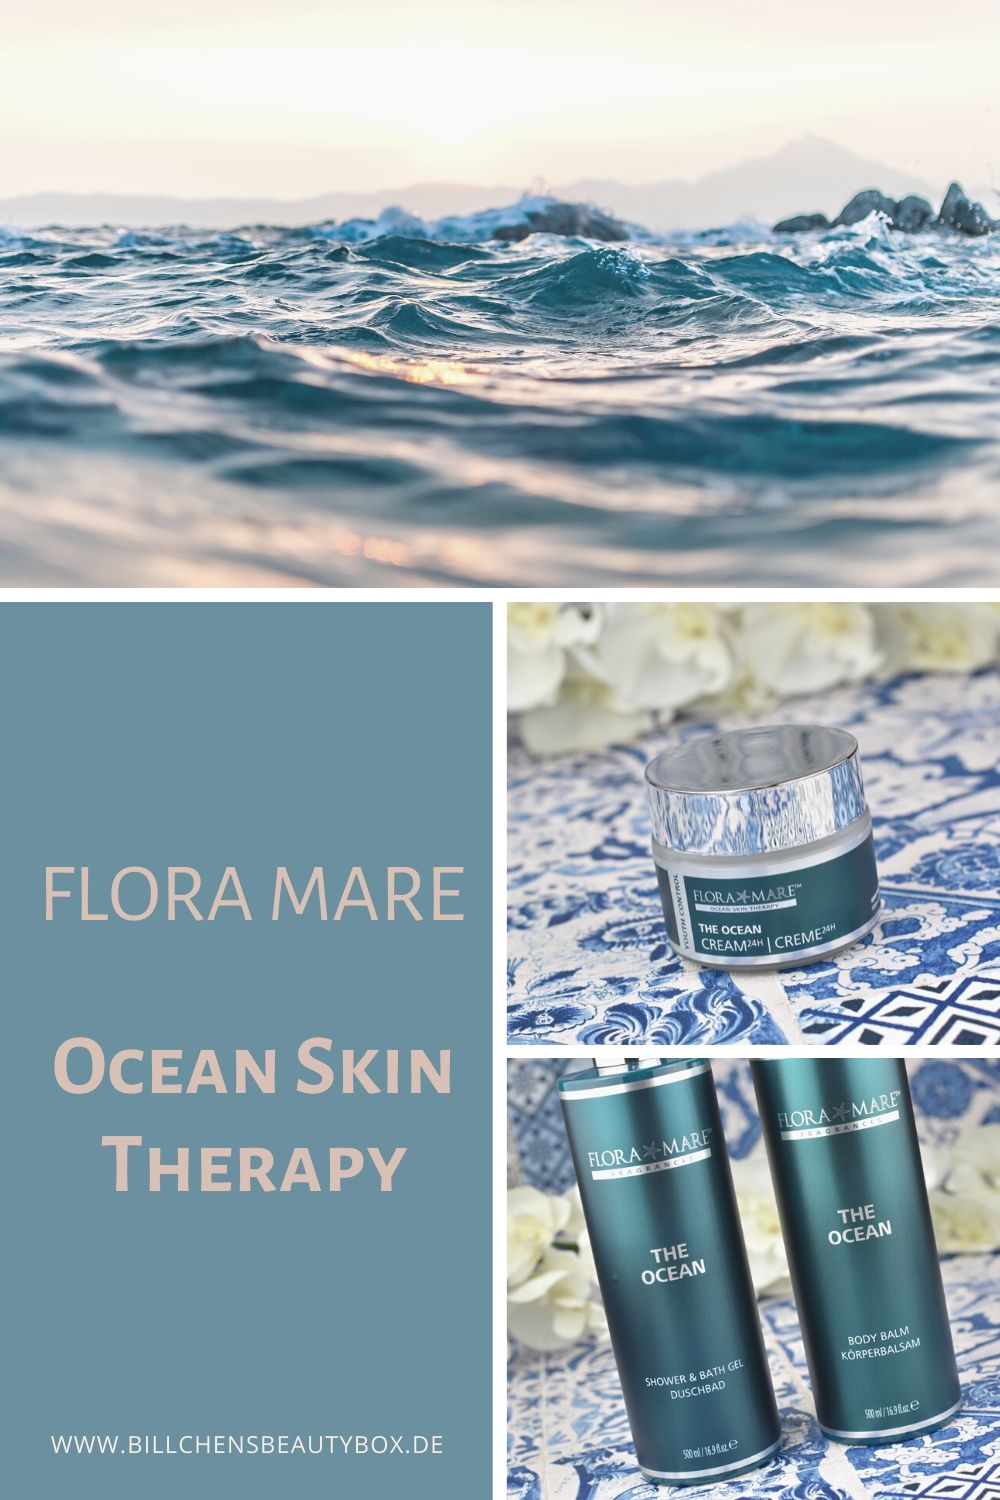 FLORA MARE Ocean Skin Therapy, Hautpflege, Gesichtspflege, Review, Erfahrung, Skincare, Anti-Aging, QVC Beauty, Parfum